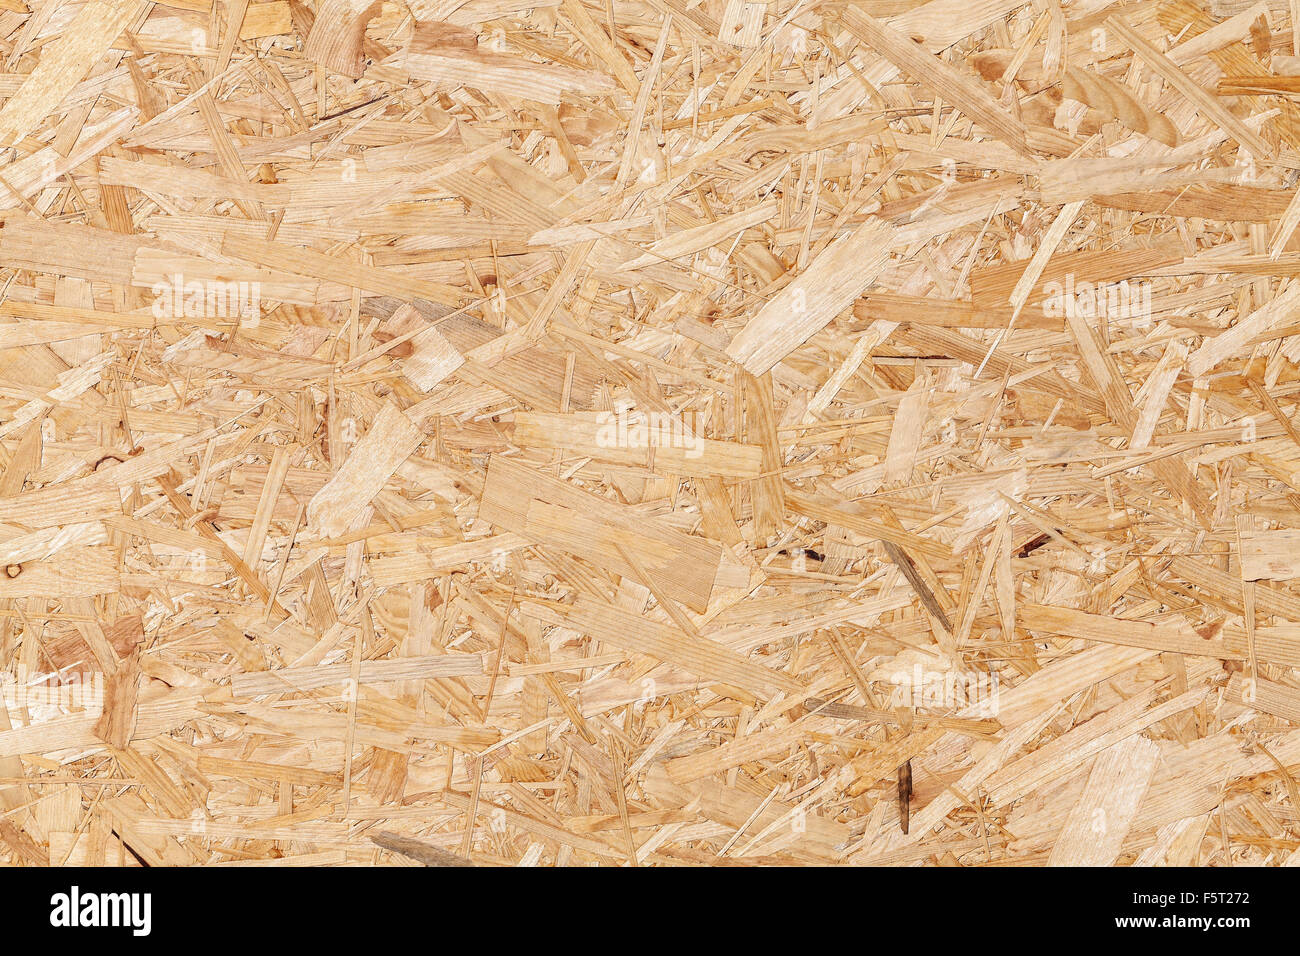 Hardboard or masonite board texture background Stock Photo - Alamy